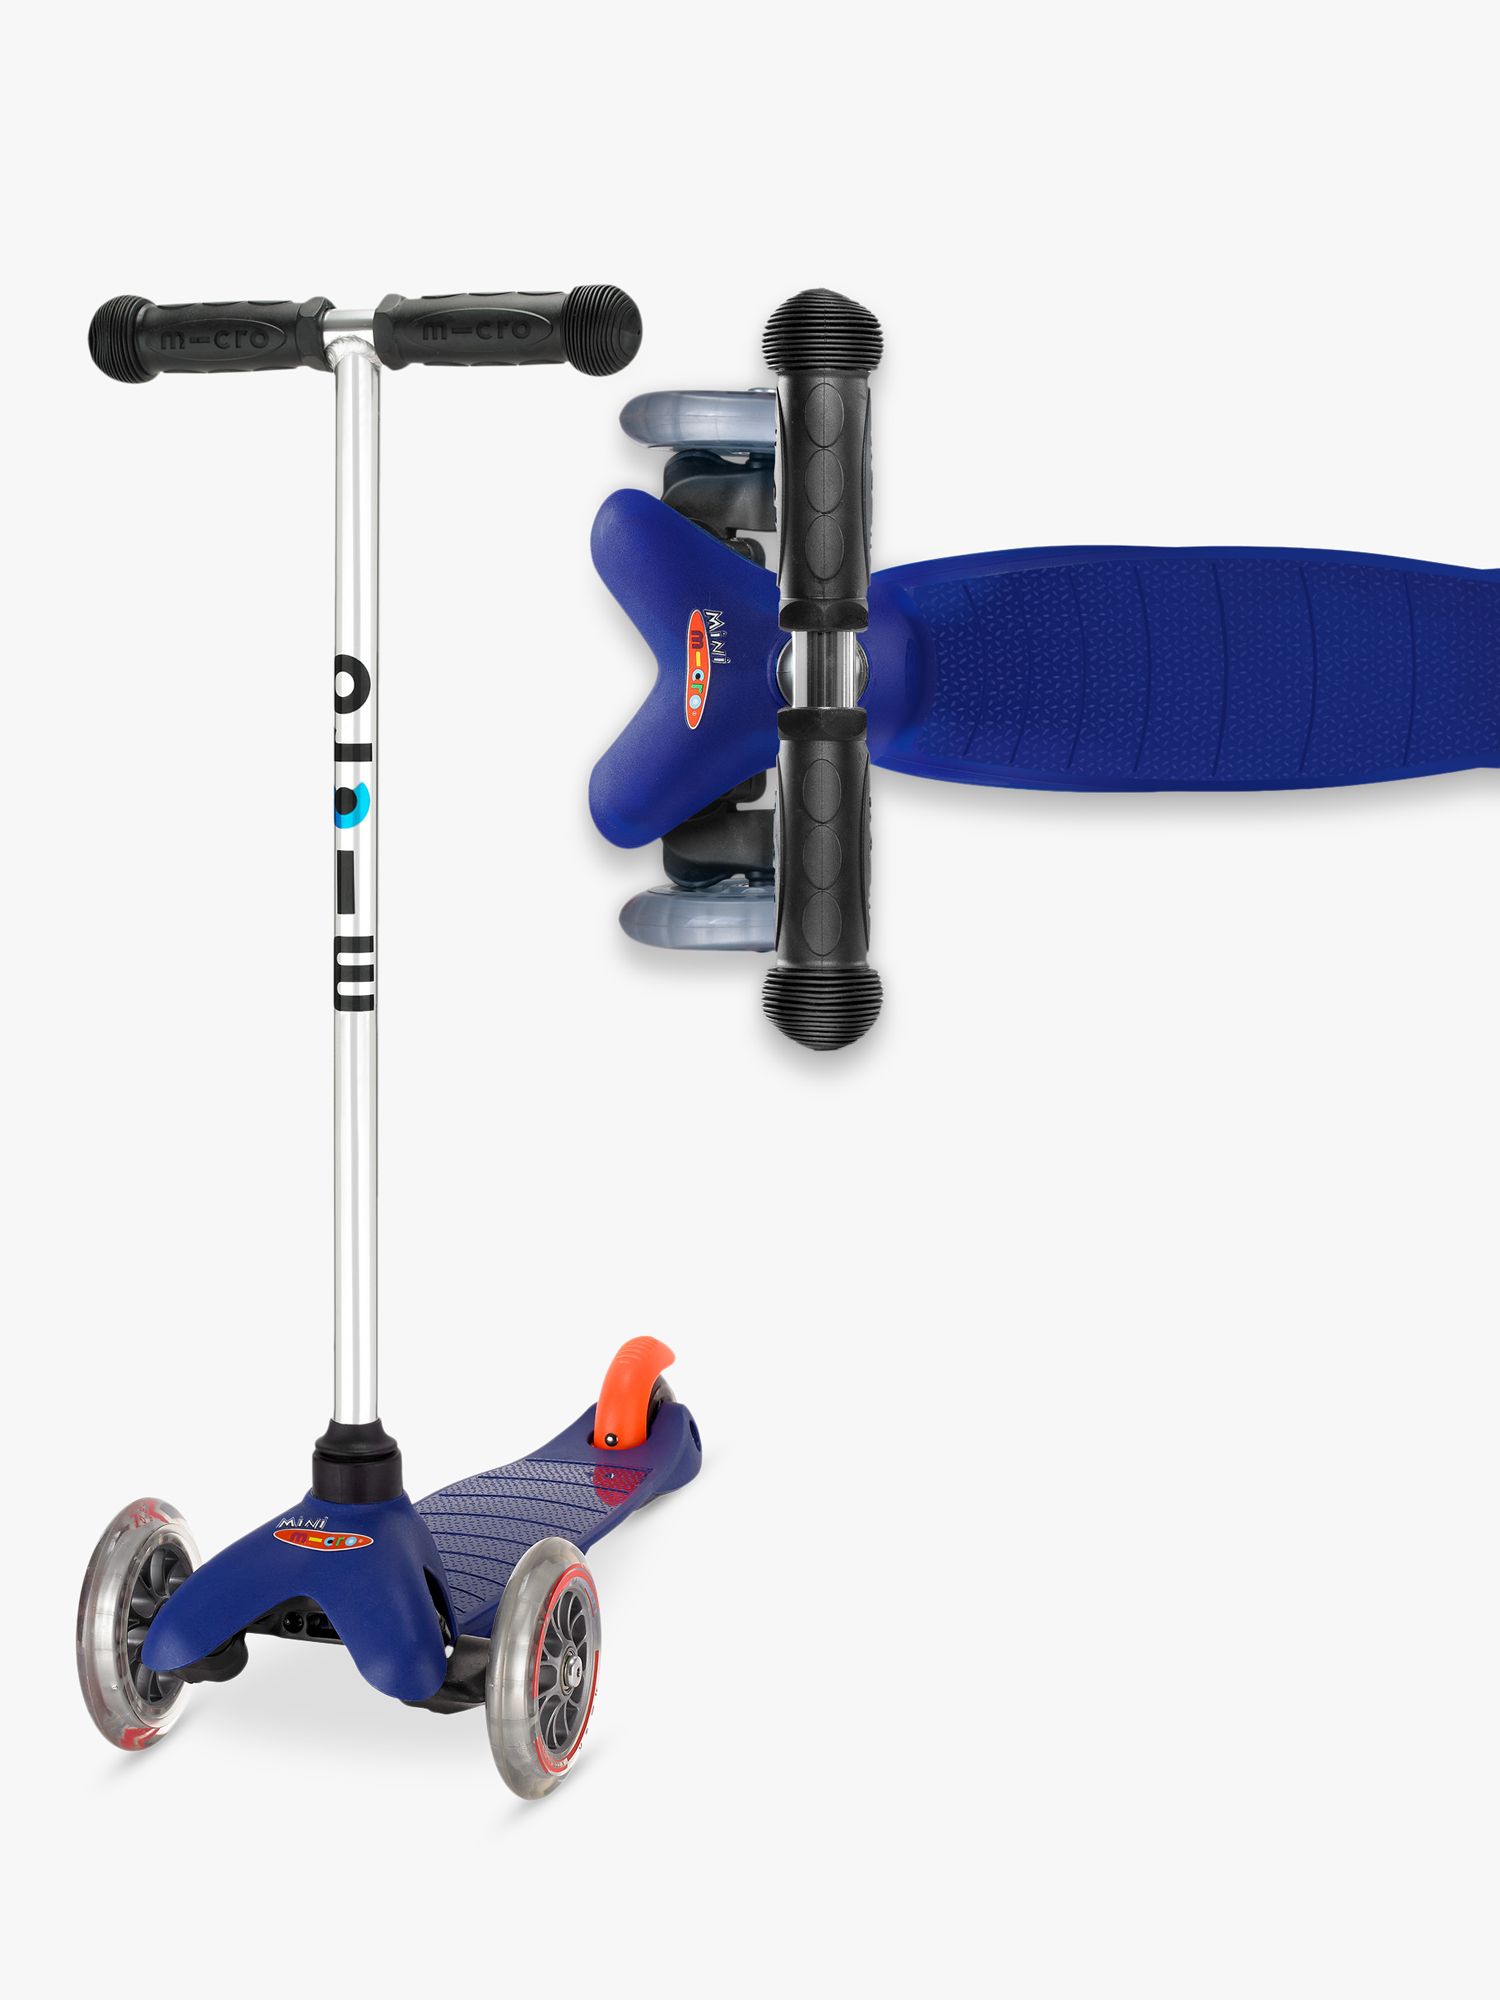 micro scooter 3 wheel